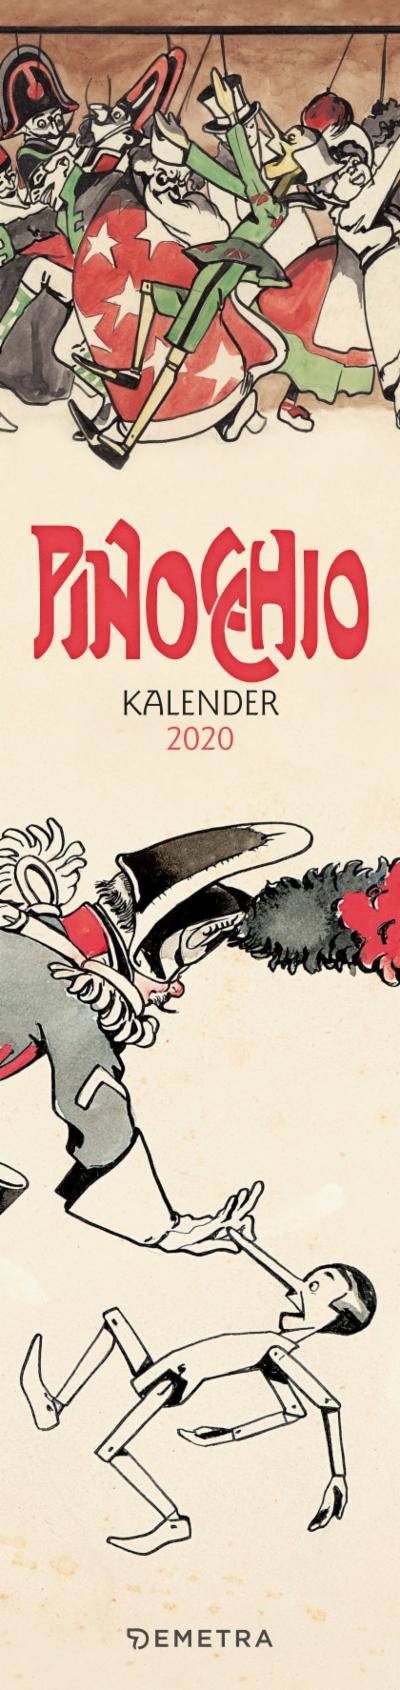 Pinocchio Kalender 2020 